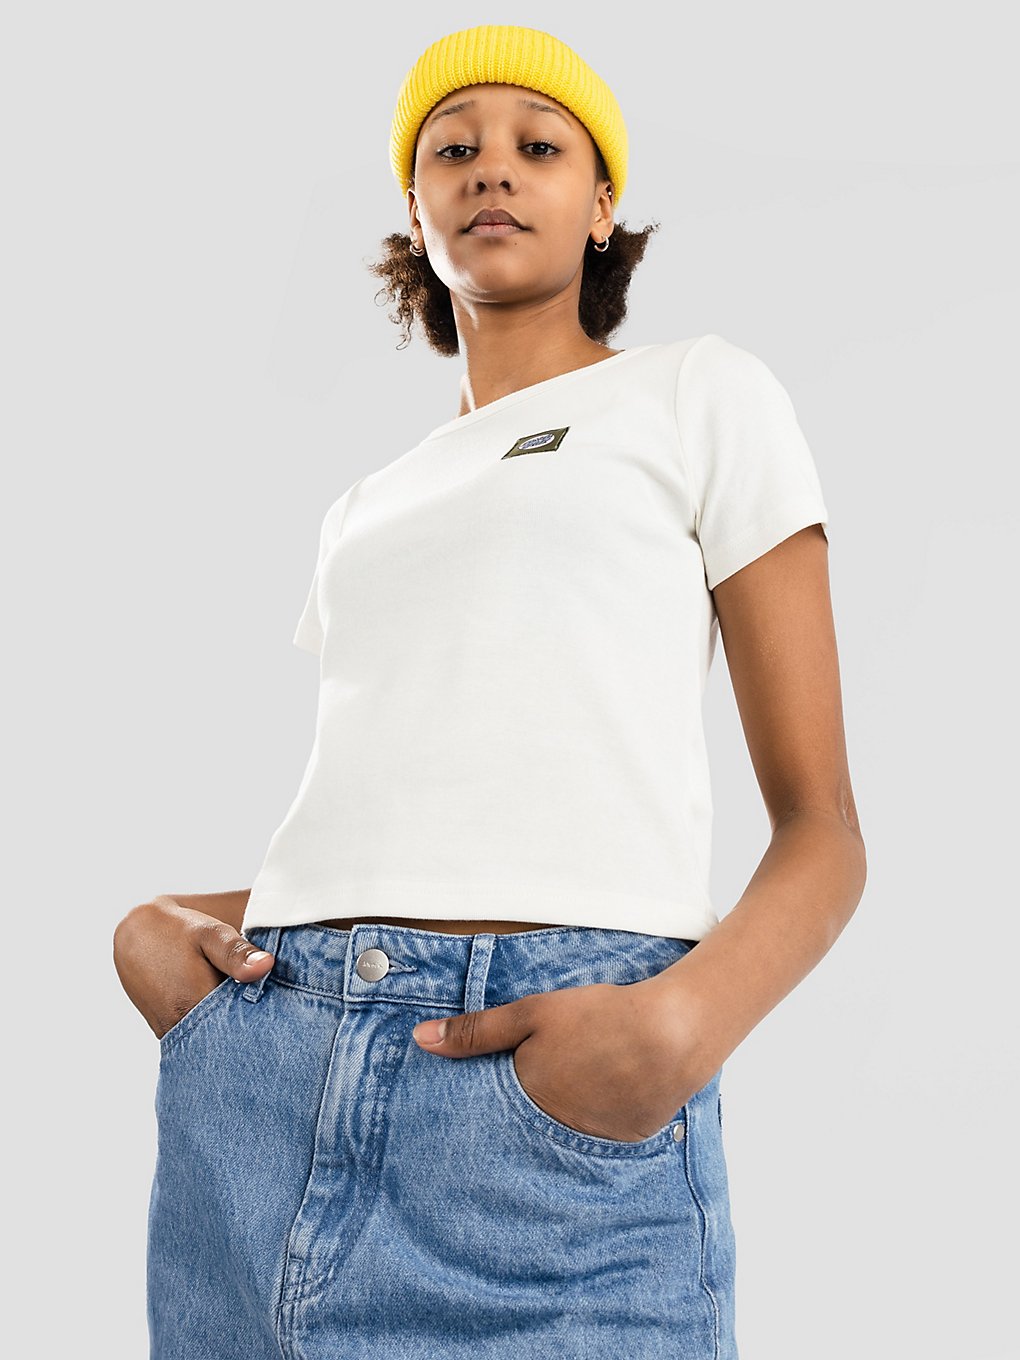 Santa Cruz Other Dot Label T-Shirt off white kaufen